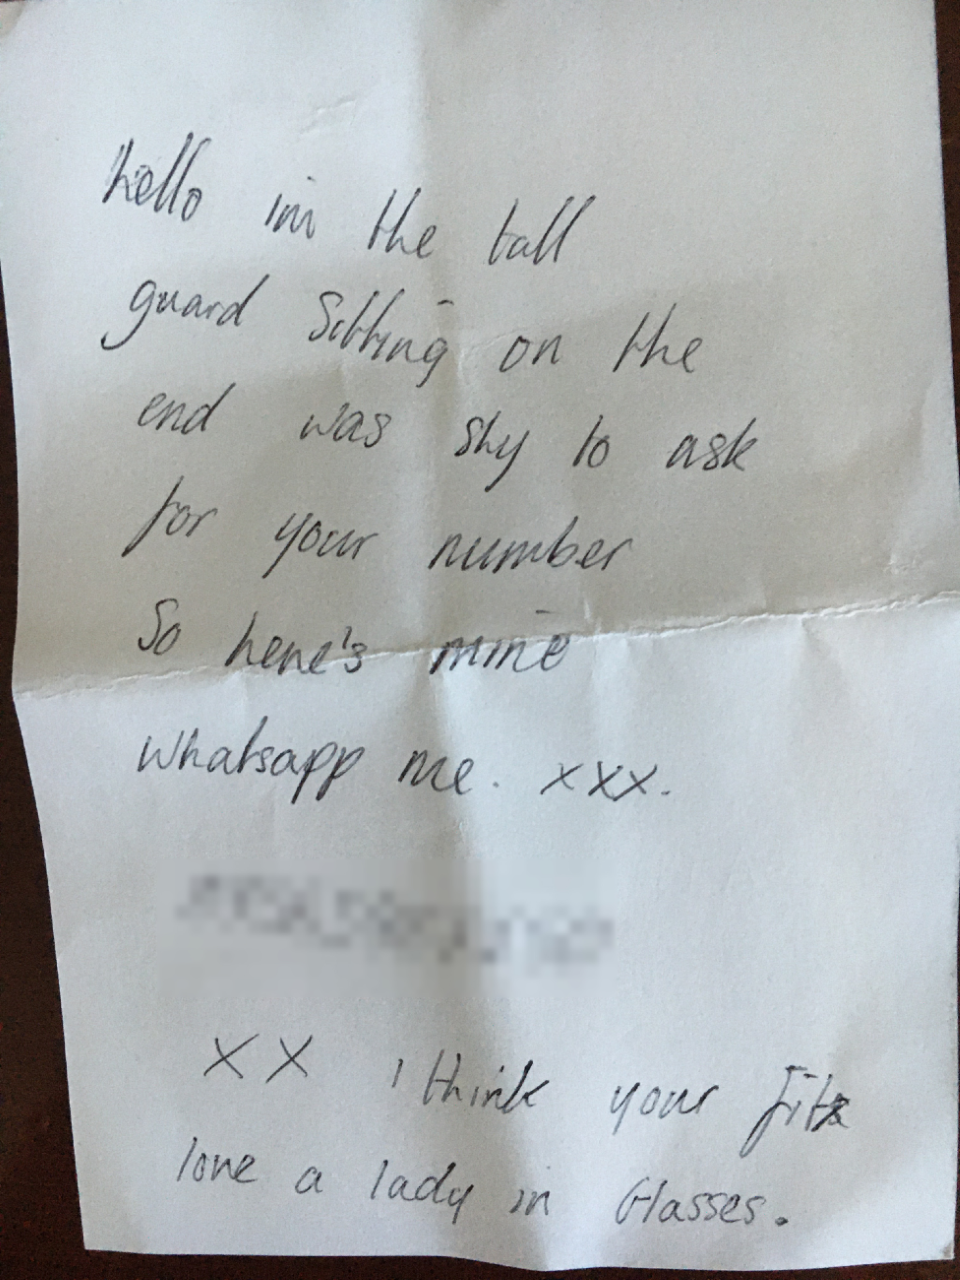 the note sent to Caroline